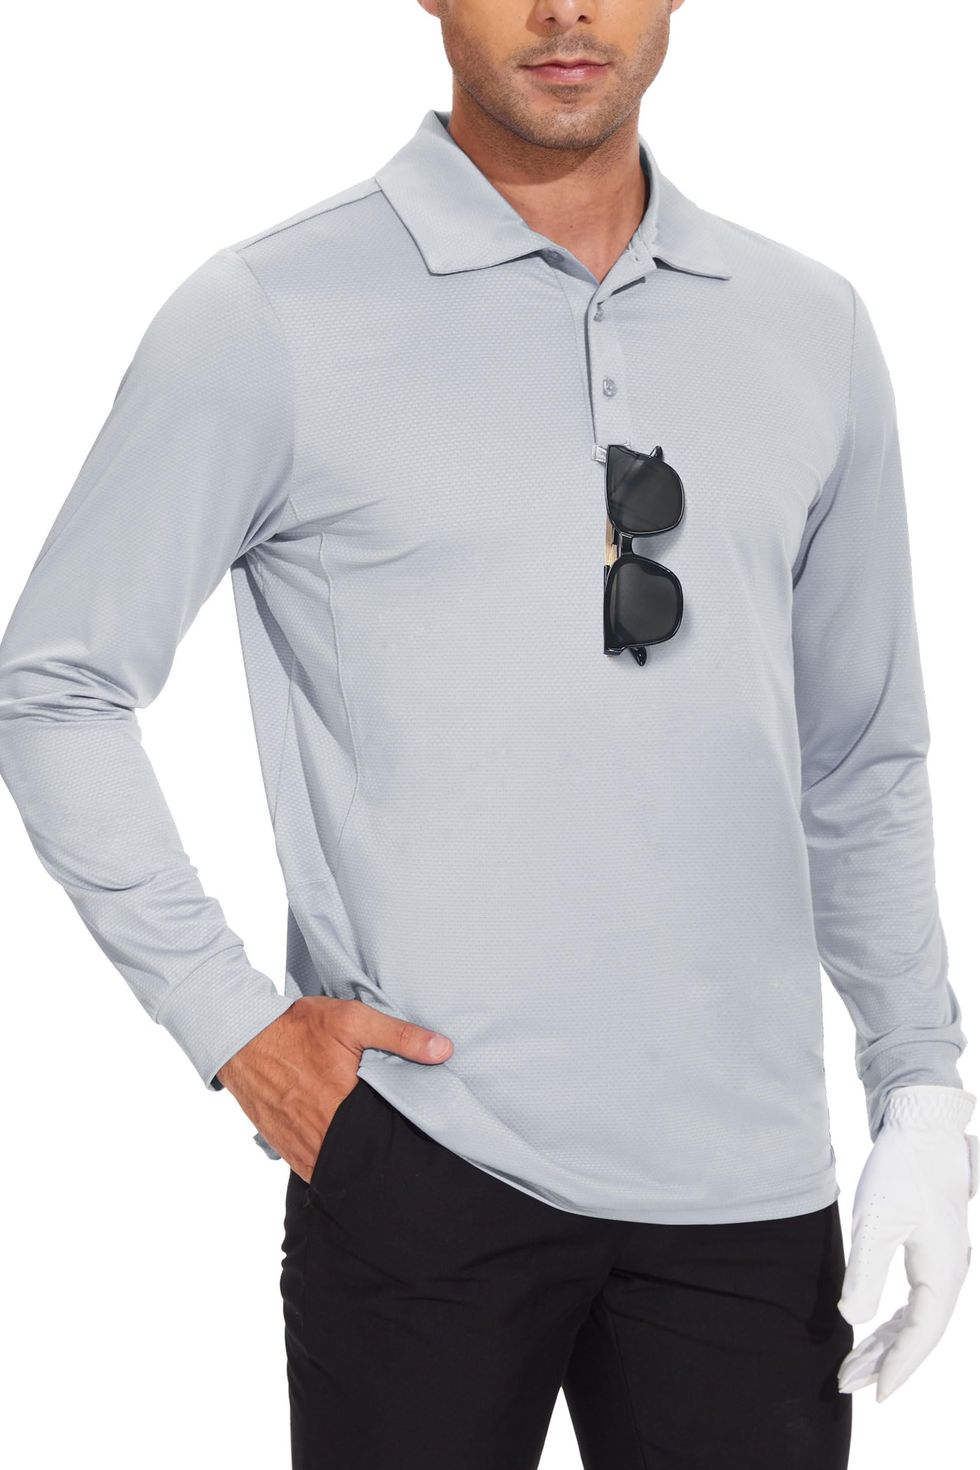 Men's Long Sleeve Golf Polo Shirt